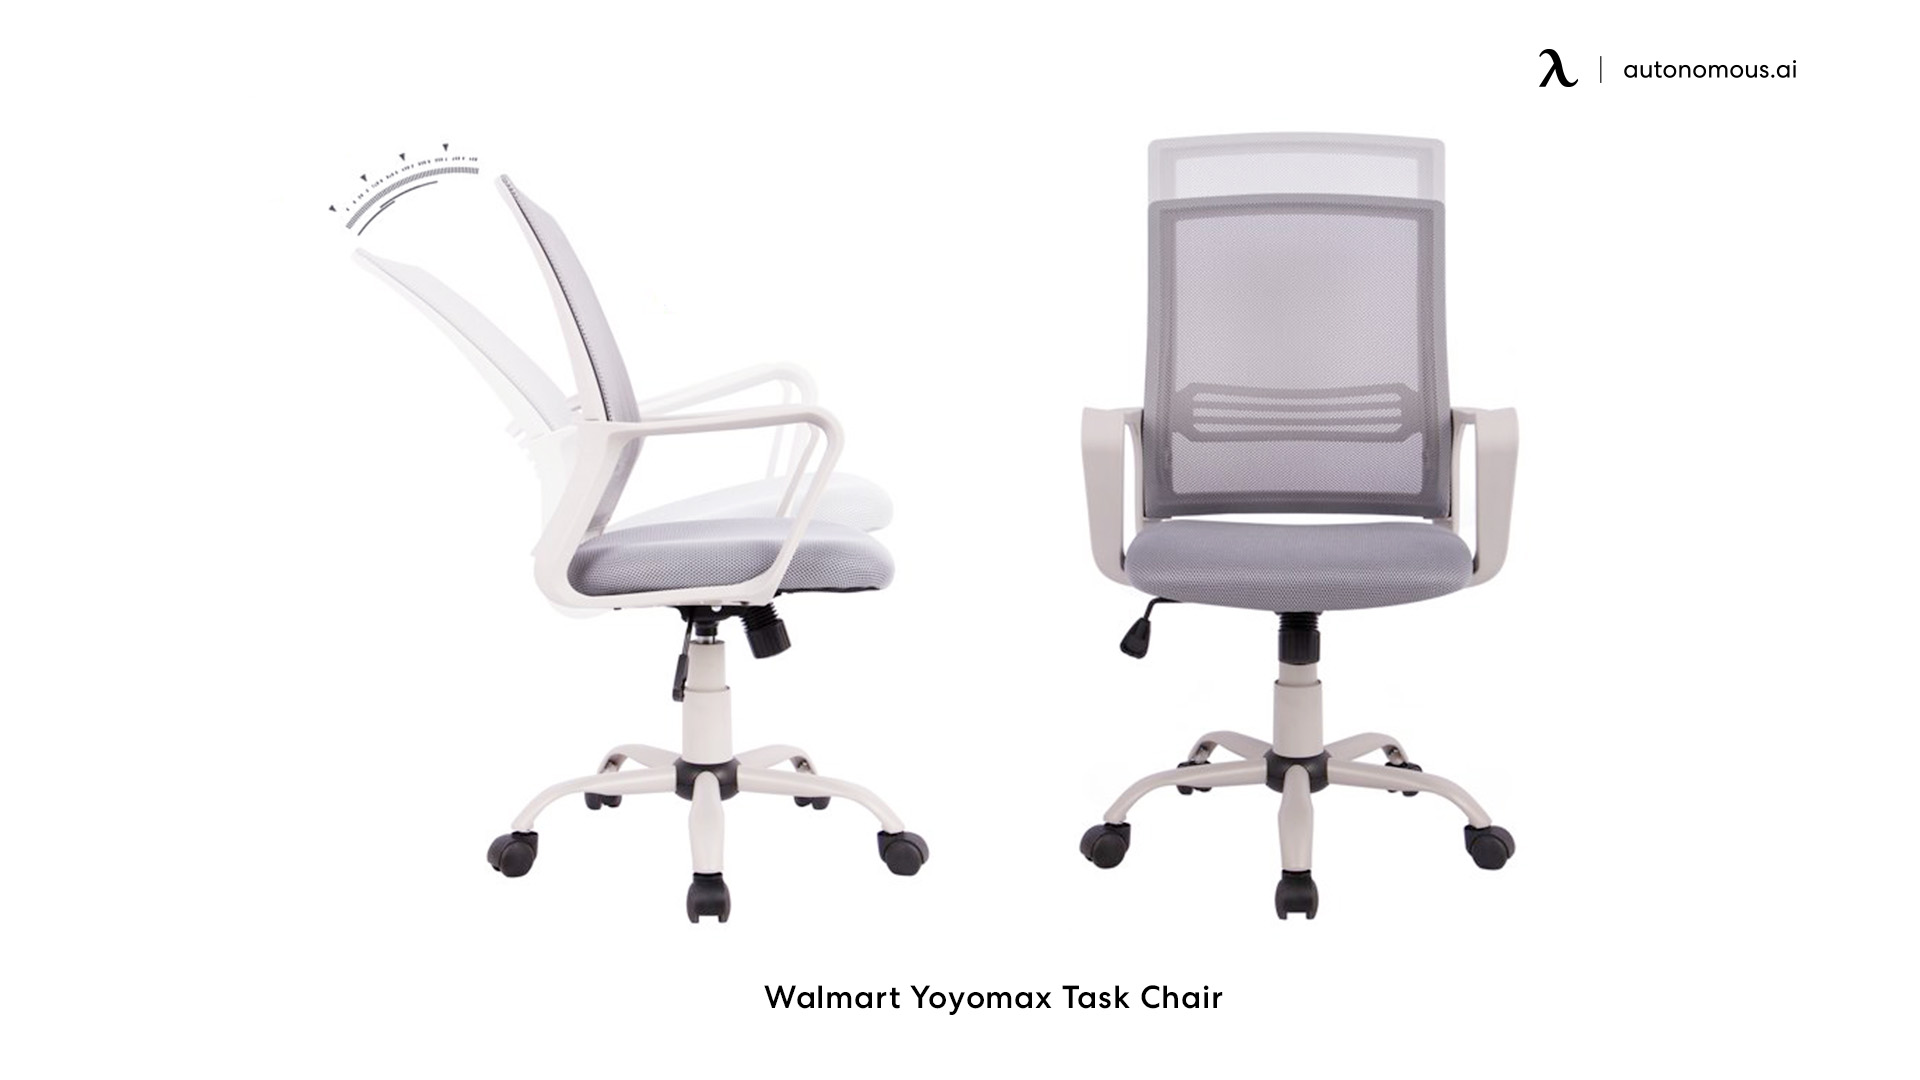 Walmart Yoyomax stylish office chair